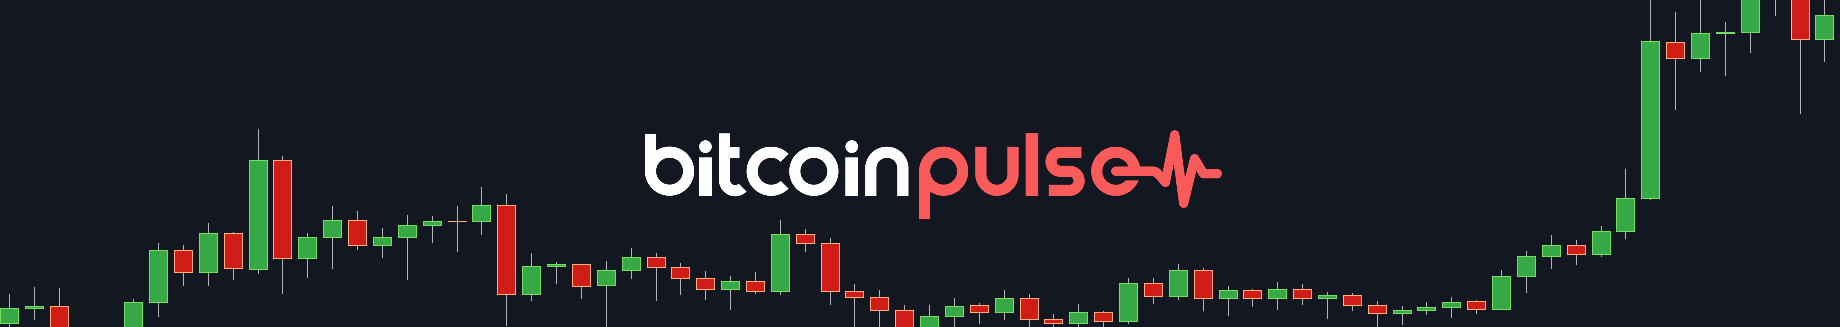 Price has gone vertical boys - Bitcoin Pulse #96